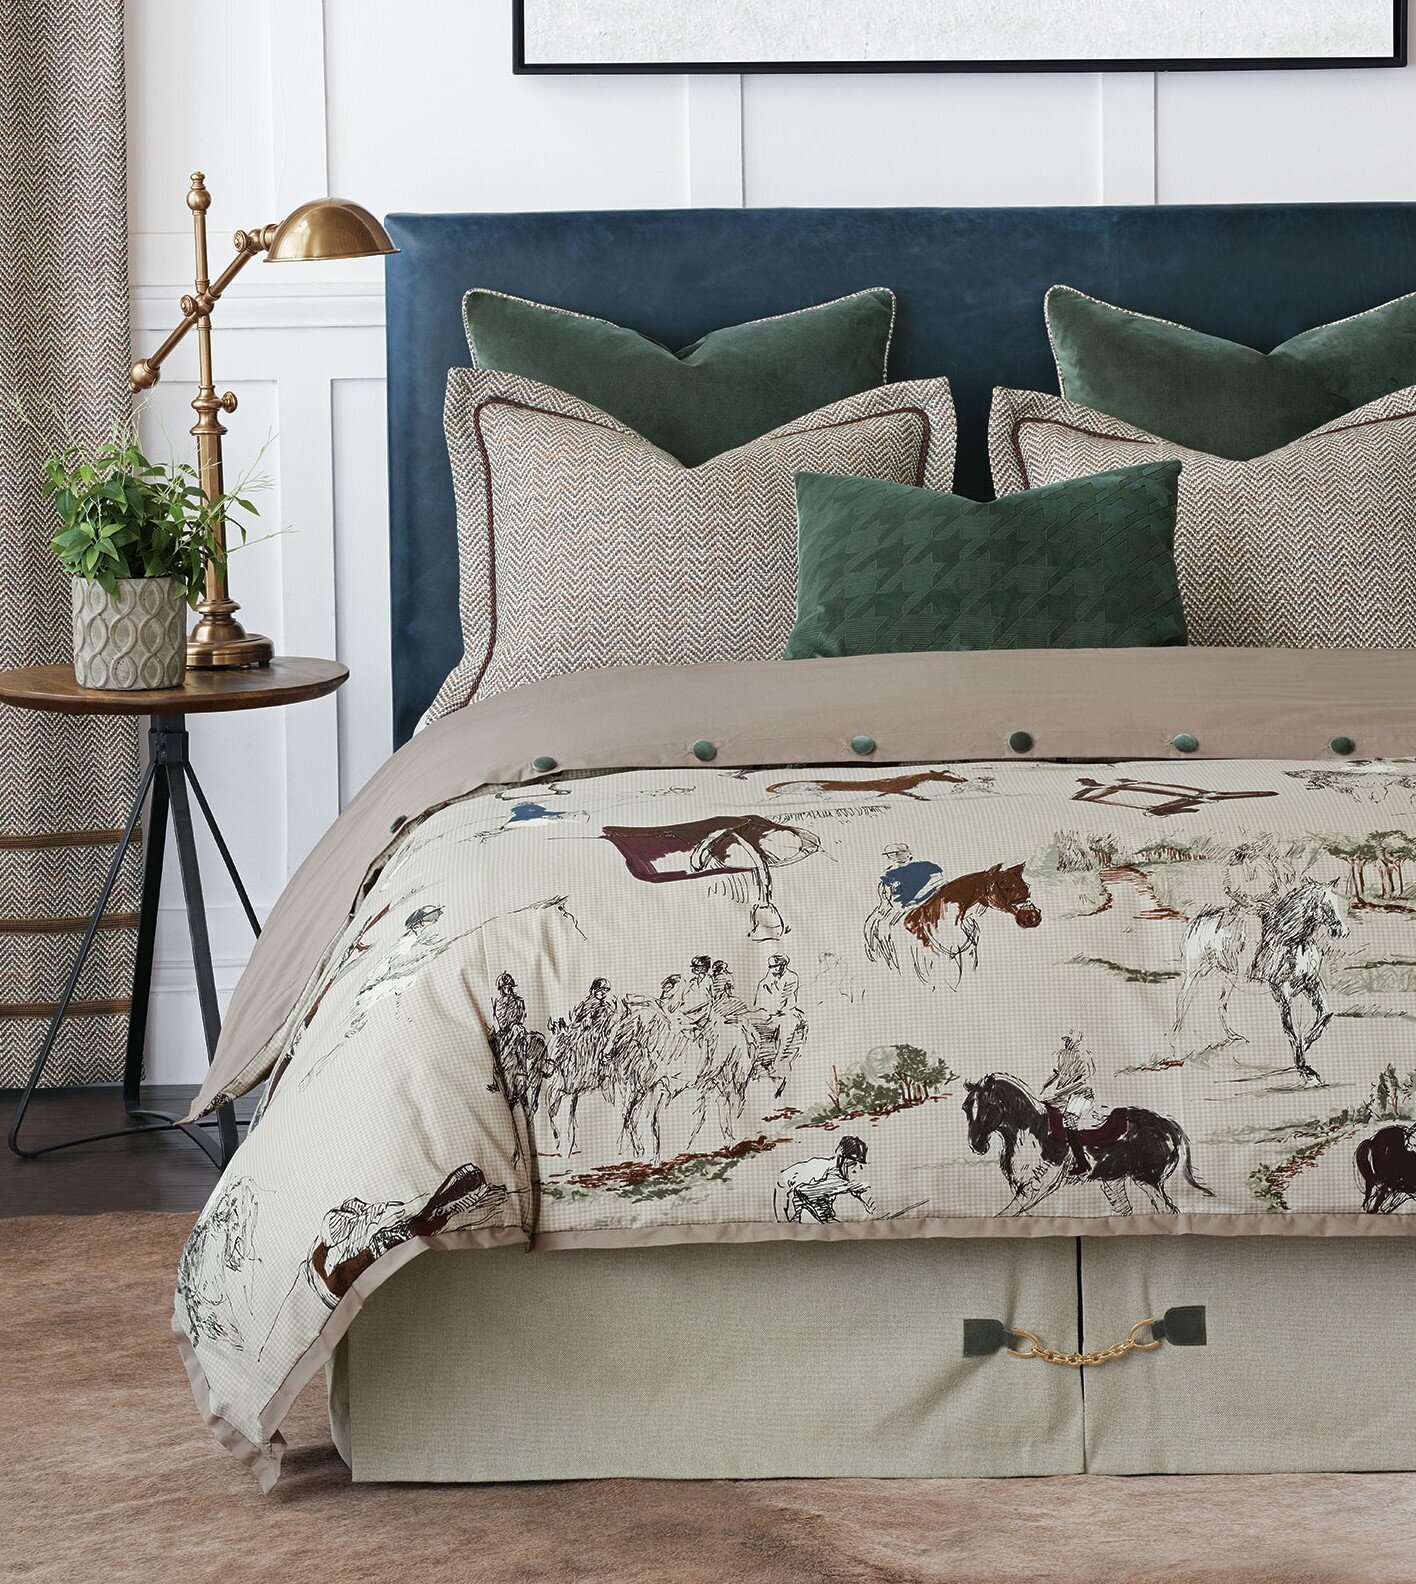  Sapphire Home Queen Size Comforter Set, 7 Piece Bed in a Bag -  Paris Decor for Bedroom Comforter Set - Black, White, and Gold Paris  Bedroom Comforter Set : Home & Kitchen